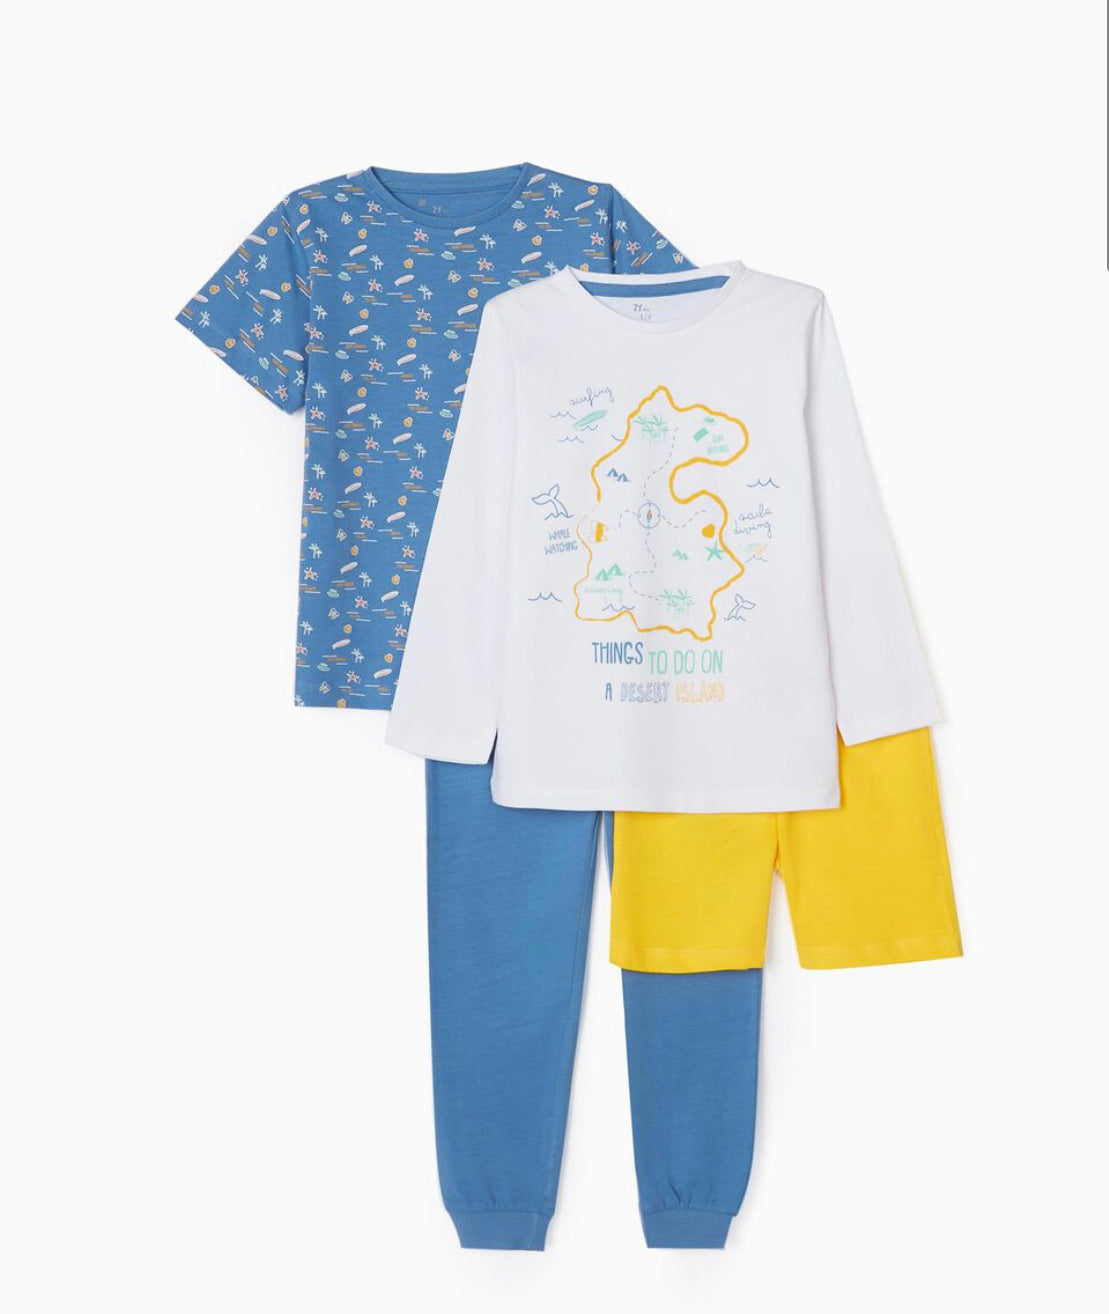 2 Pijamas Para Niño 'Summer Time', Amarillo/Azul/Blanco lolimariscalmoda 22.99